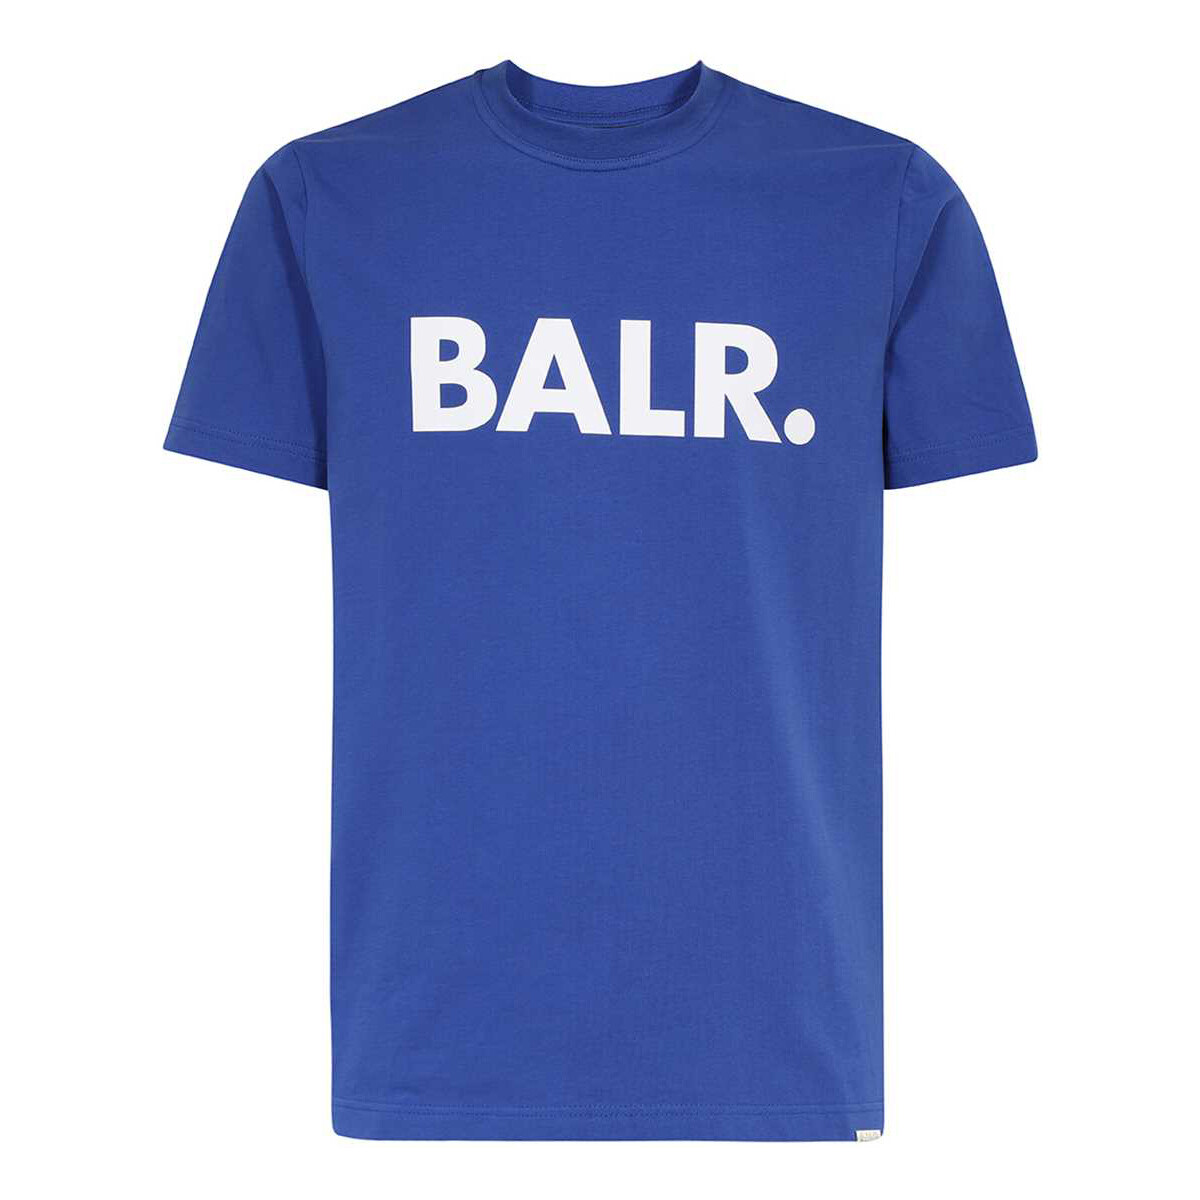 Abbigliamento Uomo T-shirt maniche corte Balr. Brand Straight T-Shirt Blu